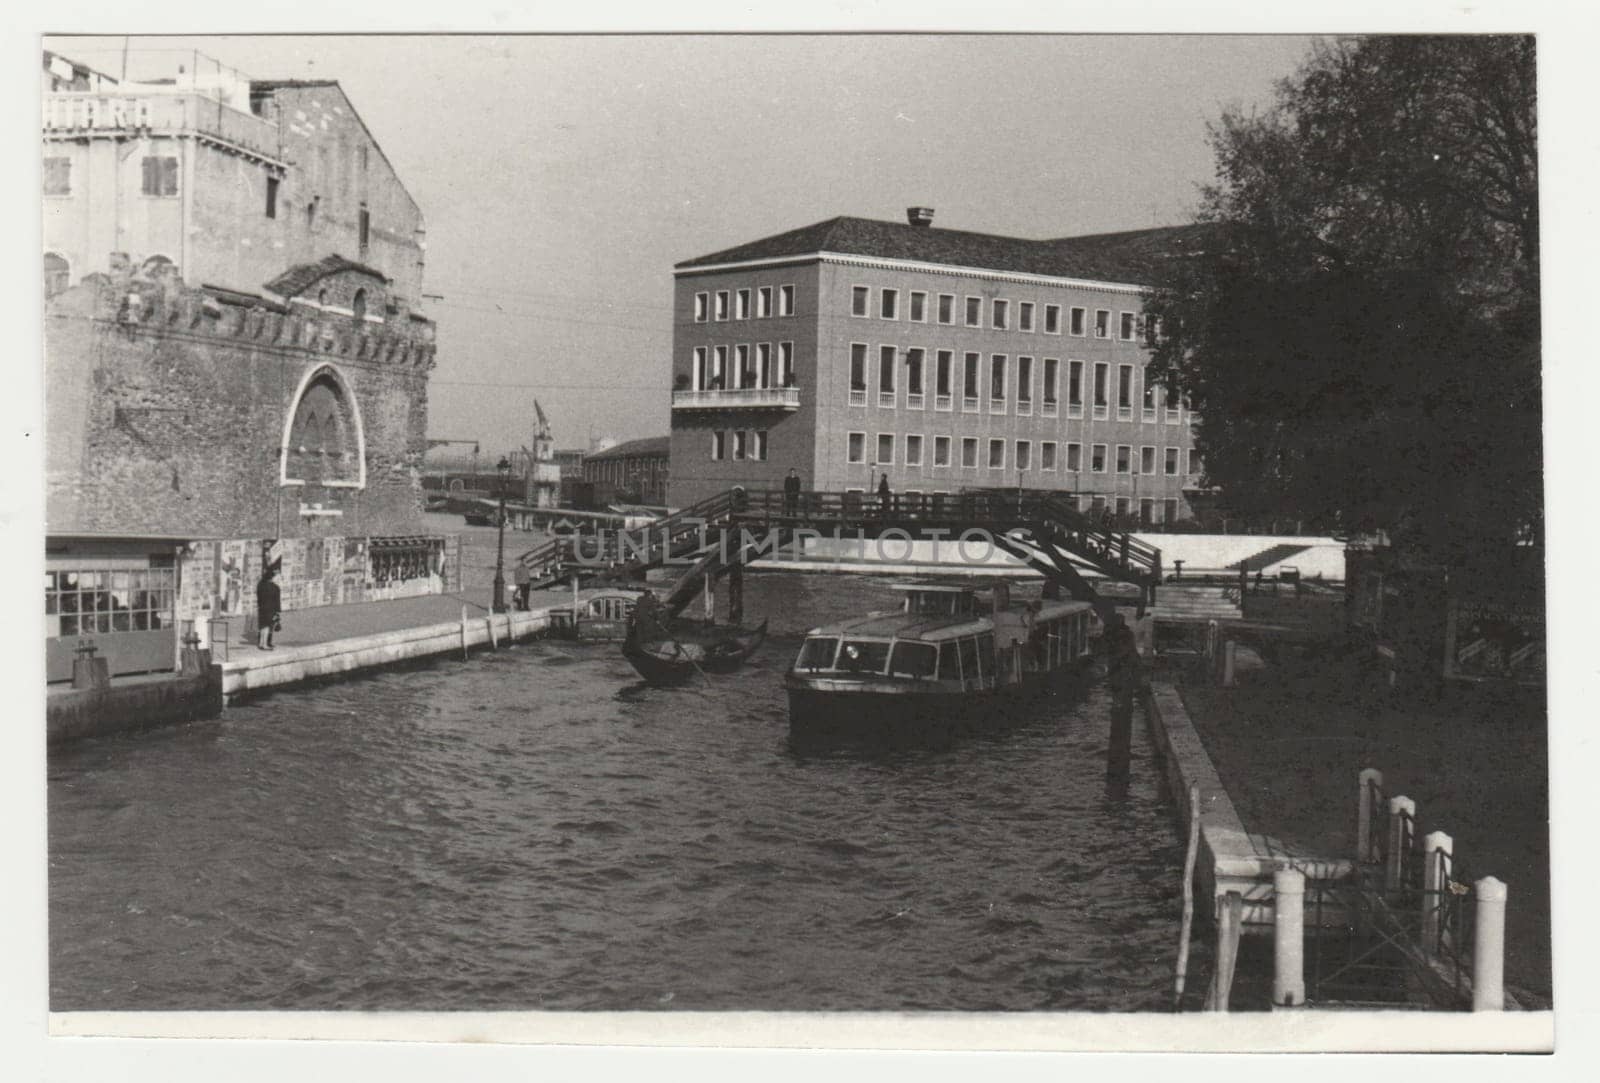 VENEZIA - VENICE, ITALY - CIRCA 1970s: Vintage photo shows the Italian town - Venice. Retro black and white photography. Circa 1970s.